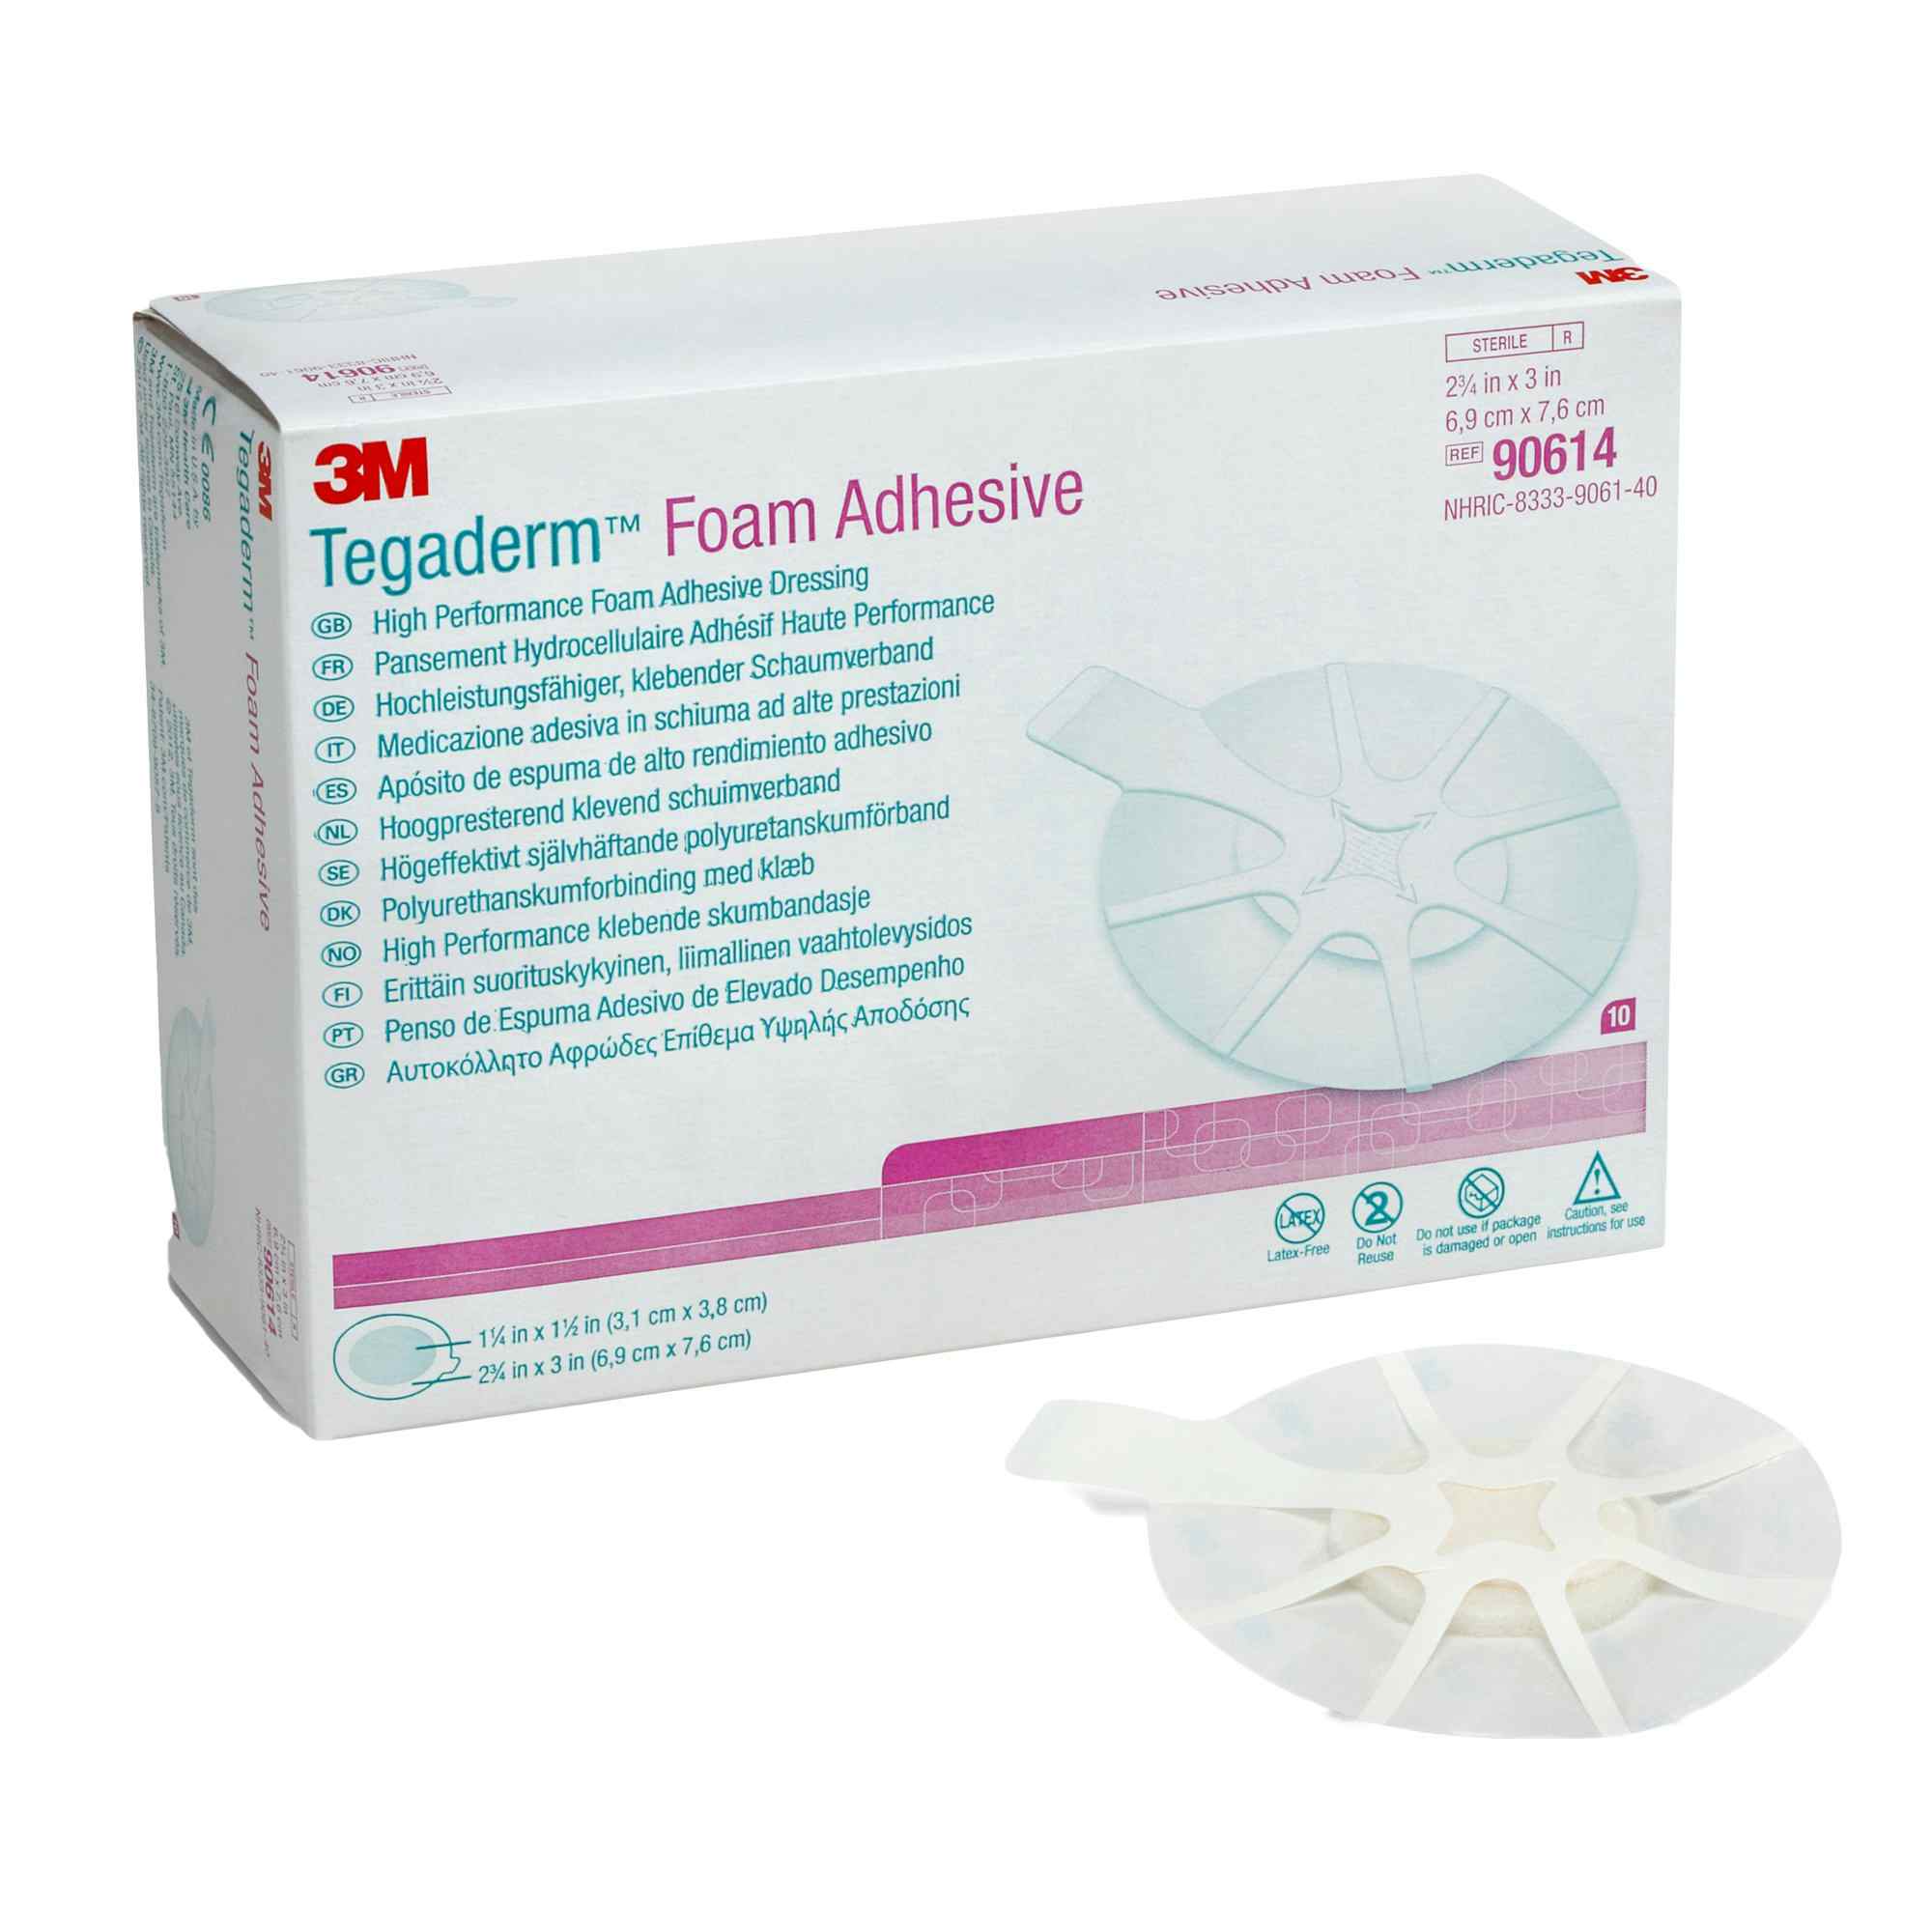 3M Tegaderm Foam Adhesive High Performance Foam Adhesive Dressing, 2.75 X 2.75", 90614, Box of 10